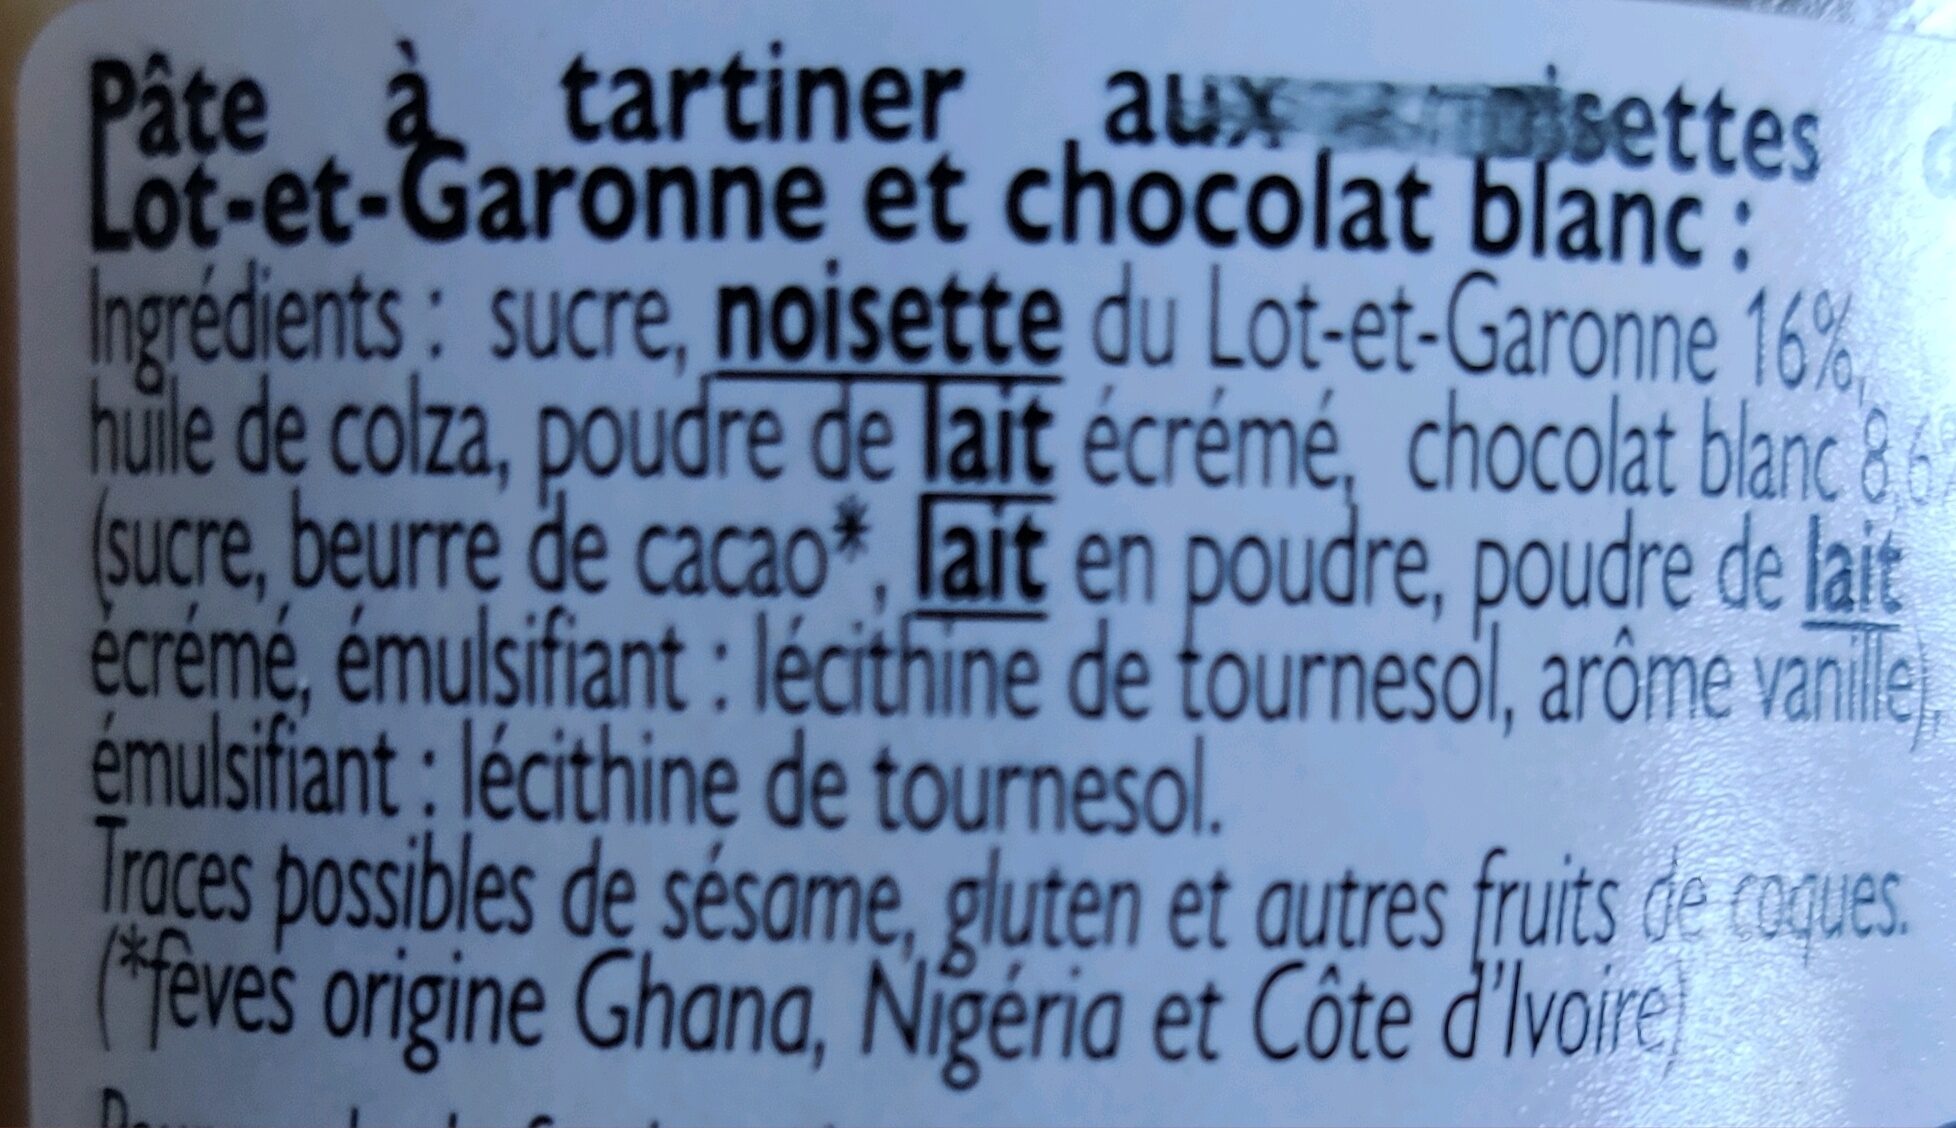 Pâte a tartiner noisettes au chocolat blanc - Ingredientes - fr